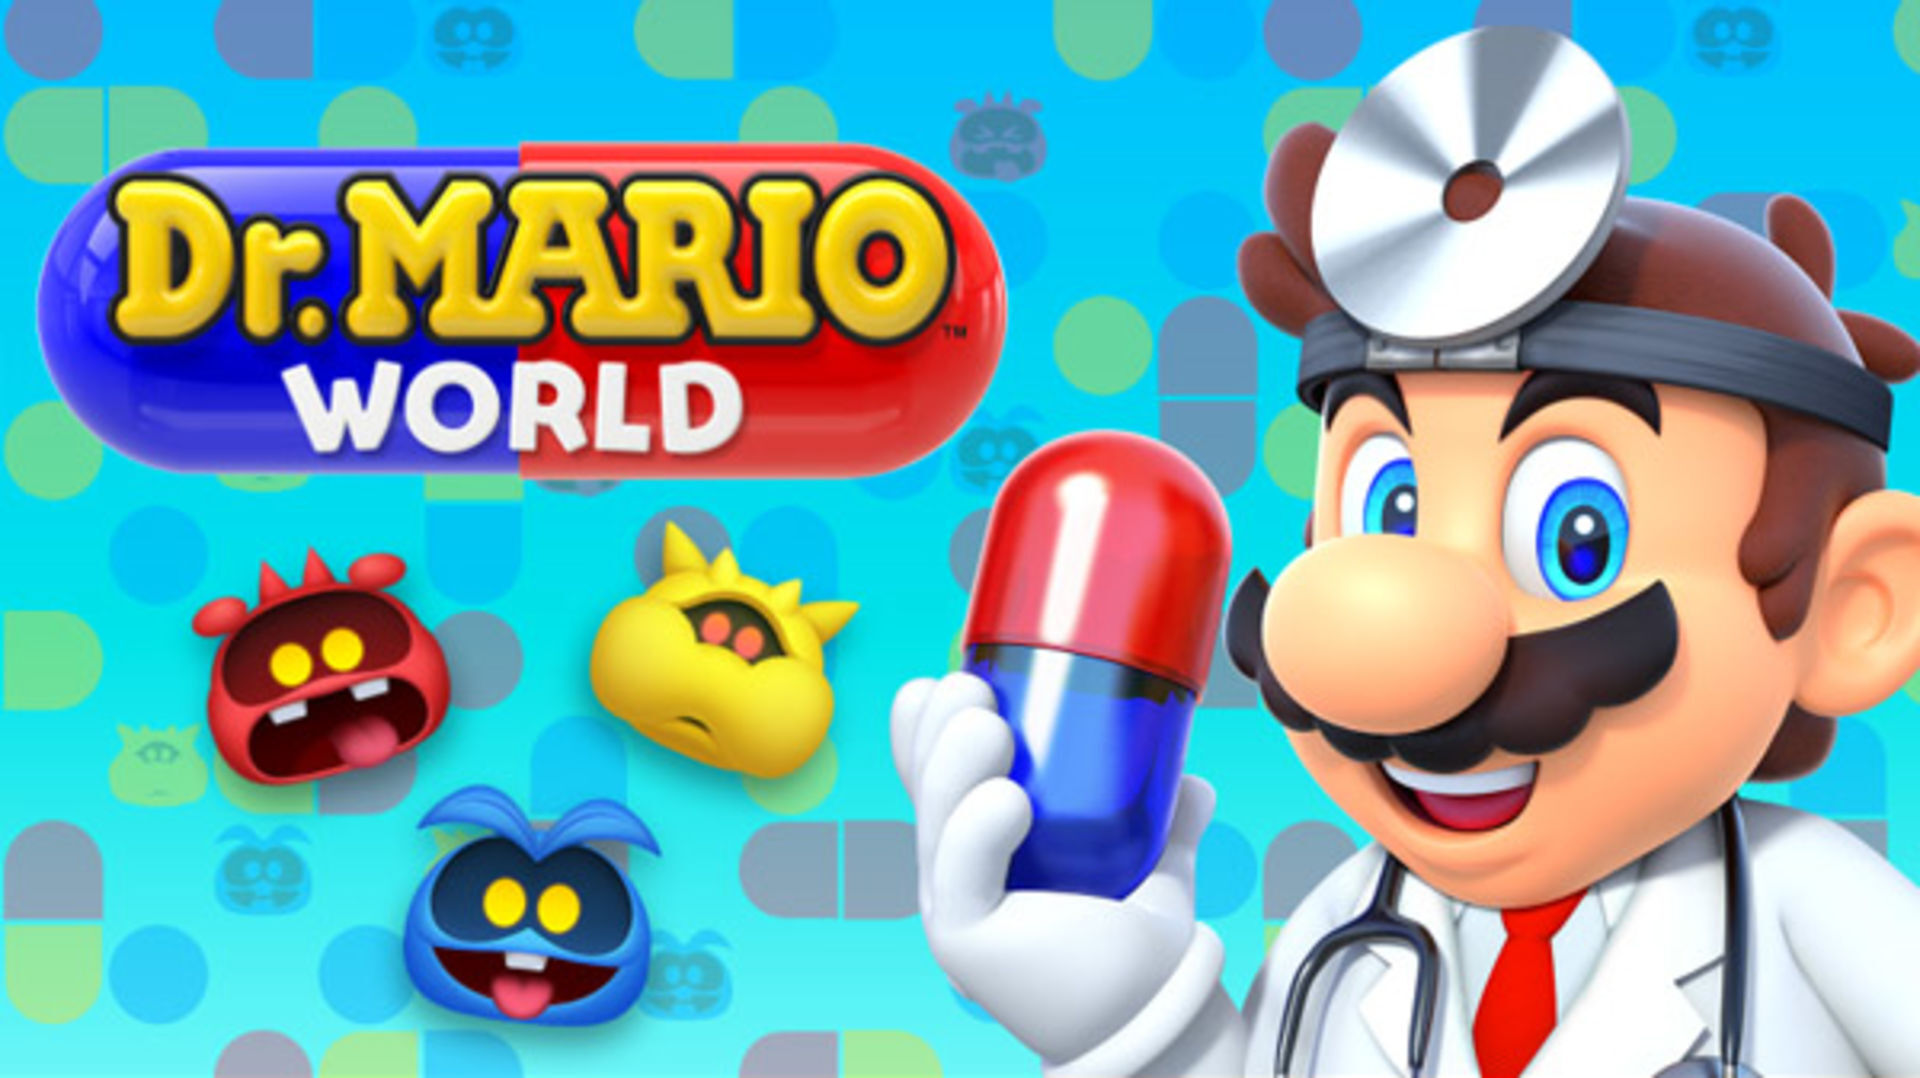 Dr. Mario World เตรียมปิดให้บริการ 1 พ.ย. นี้